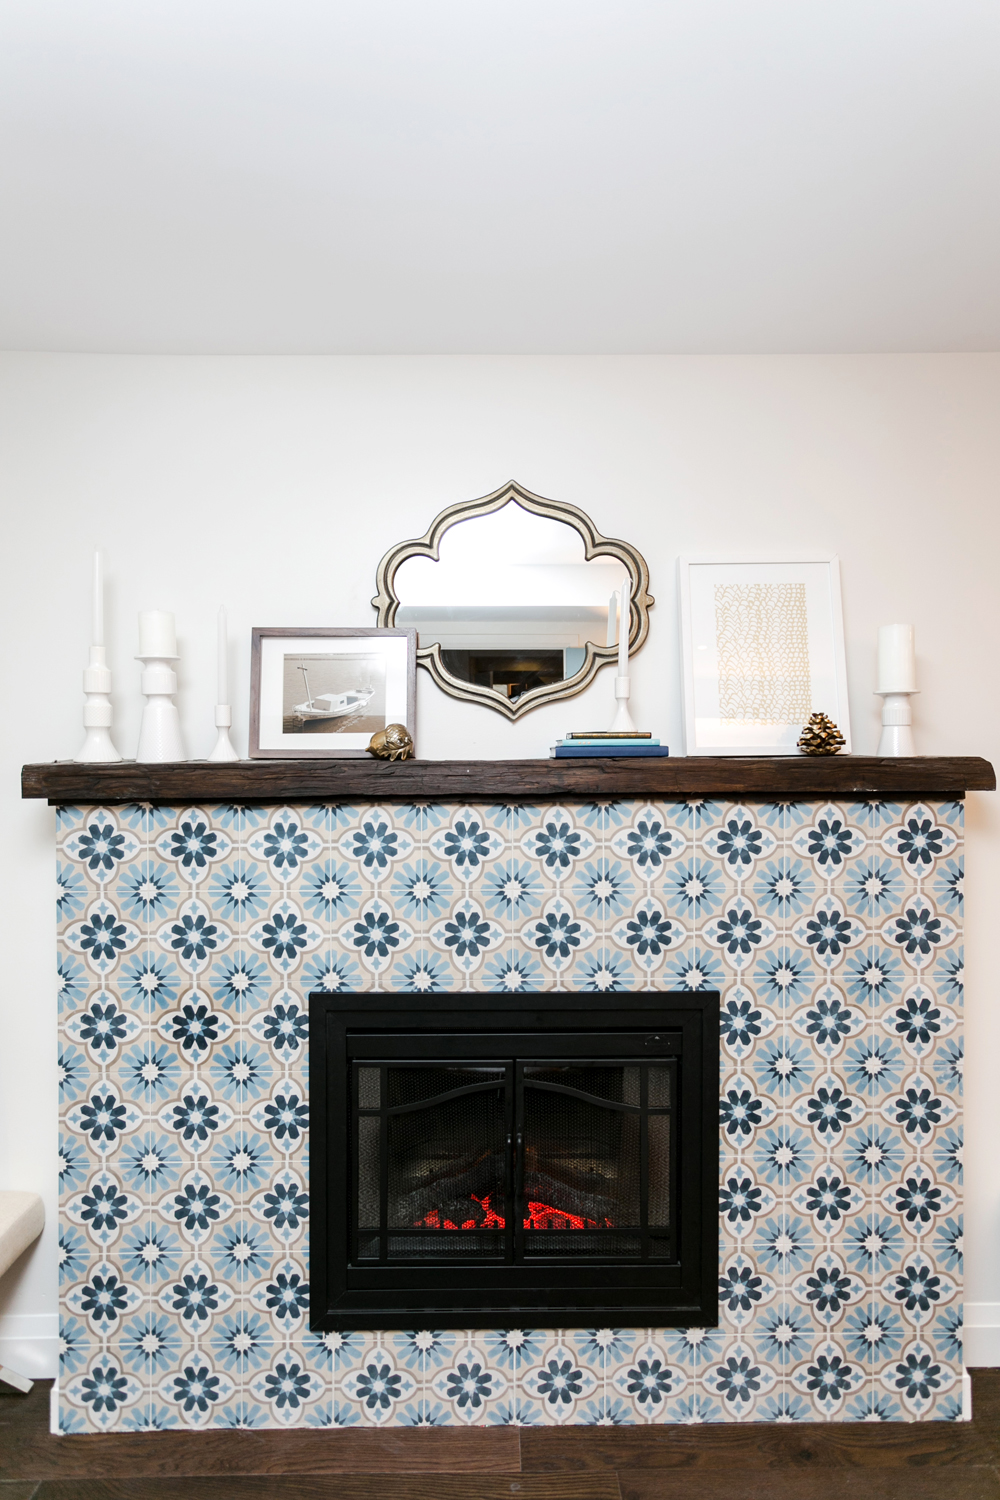 Intricate blue tile around a gas fireplace